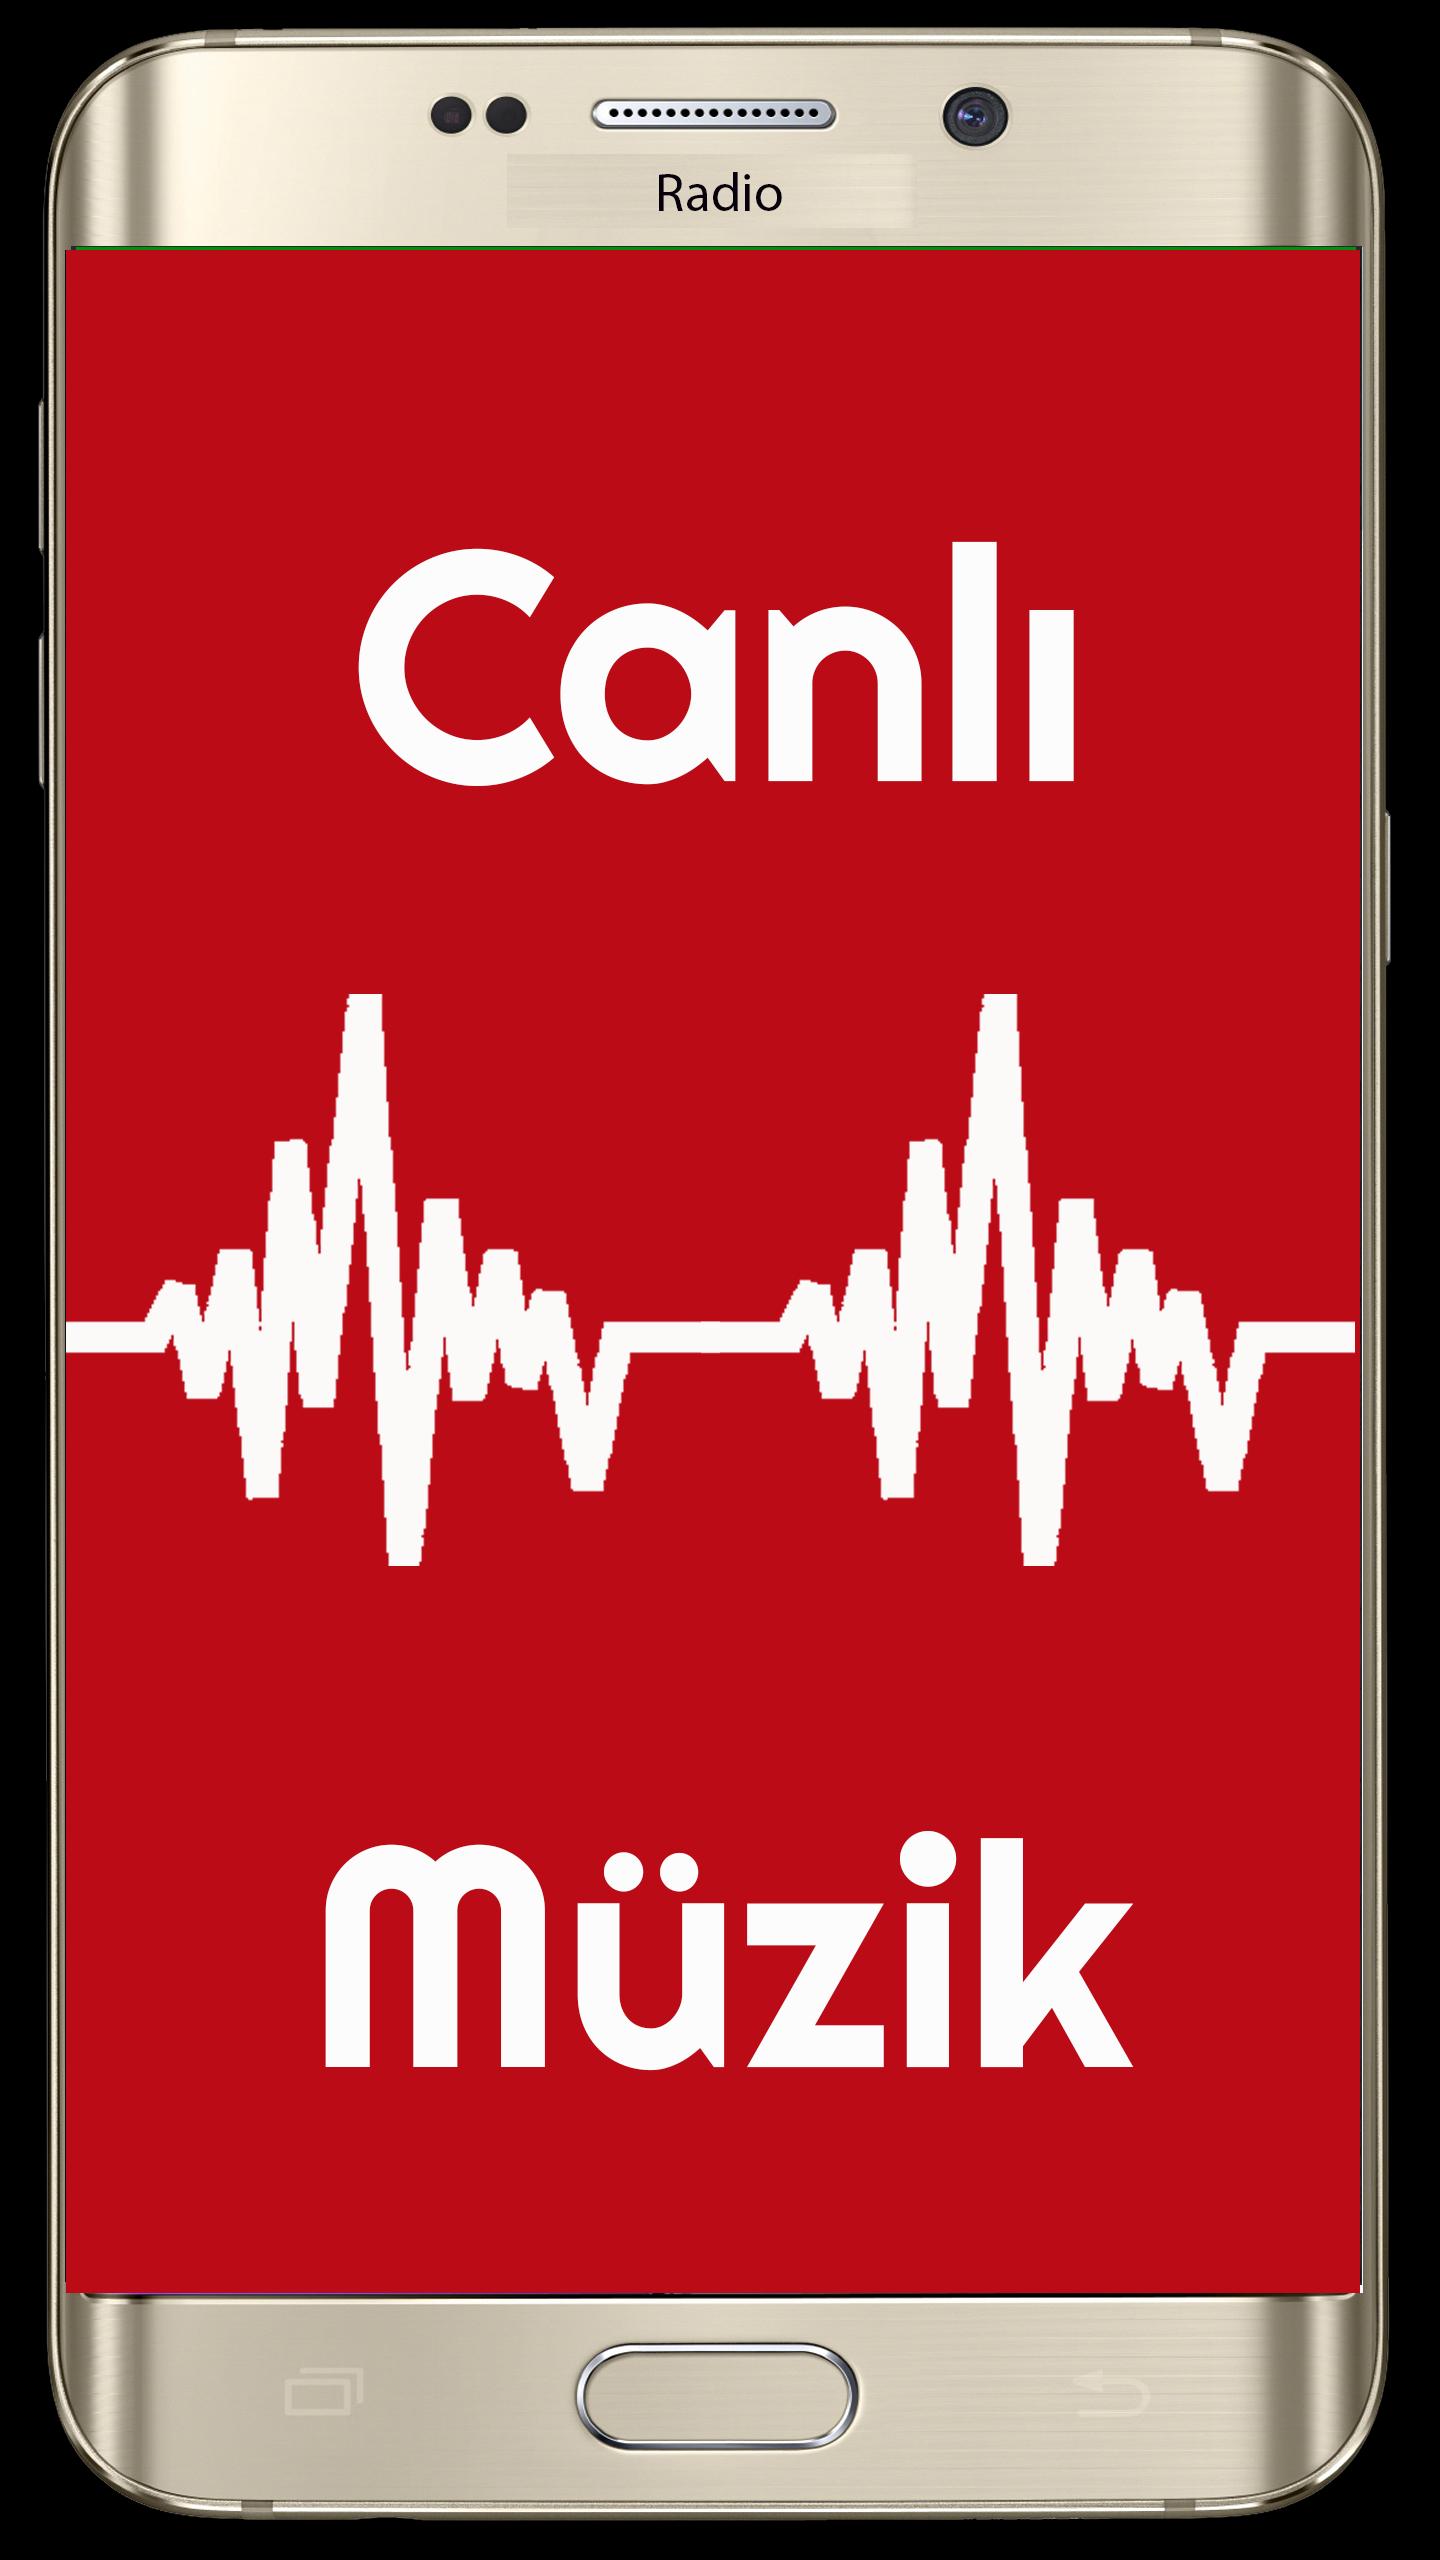 Türkçe Müzik for Android - APK Download